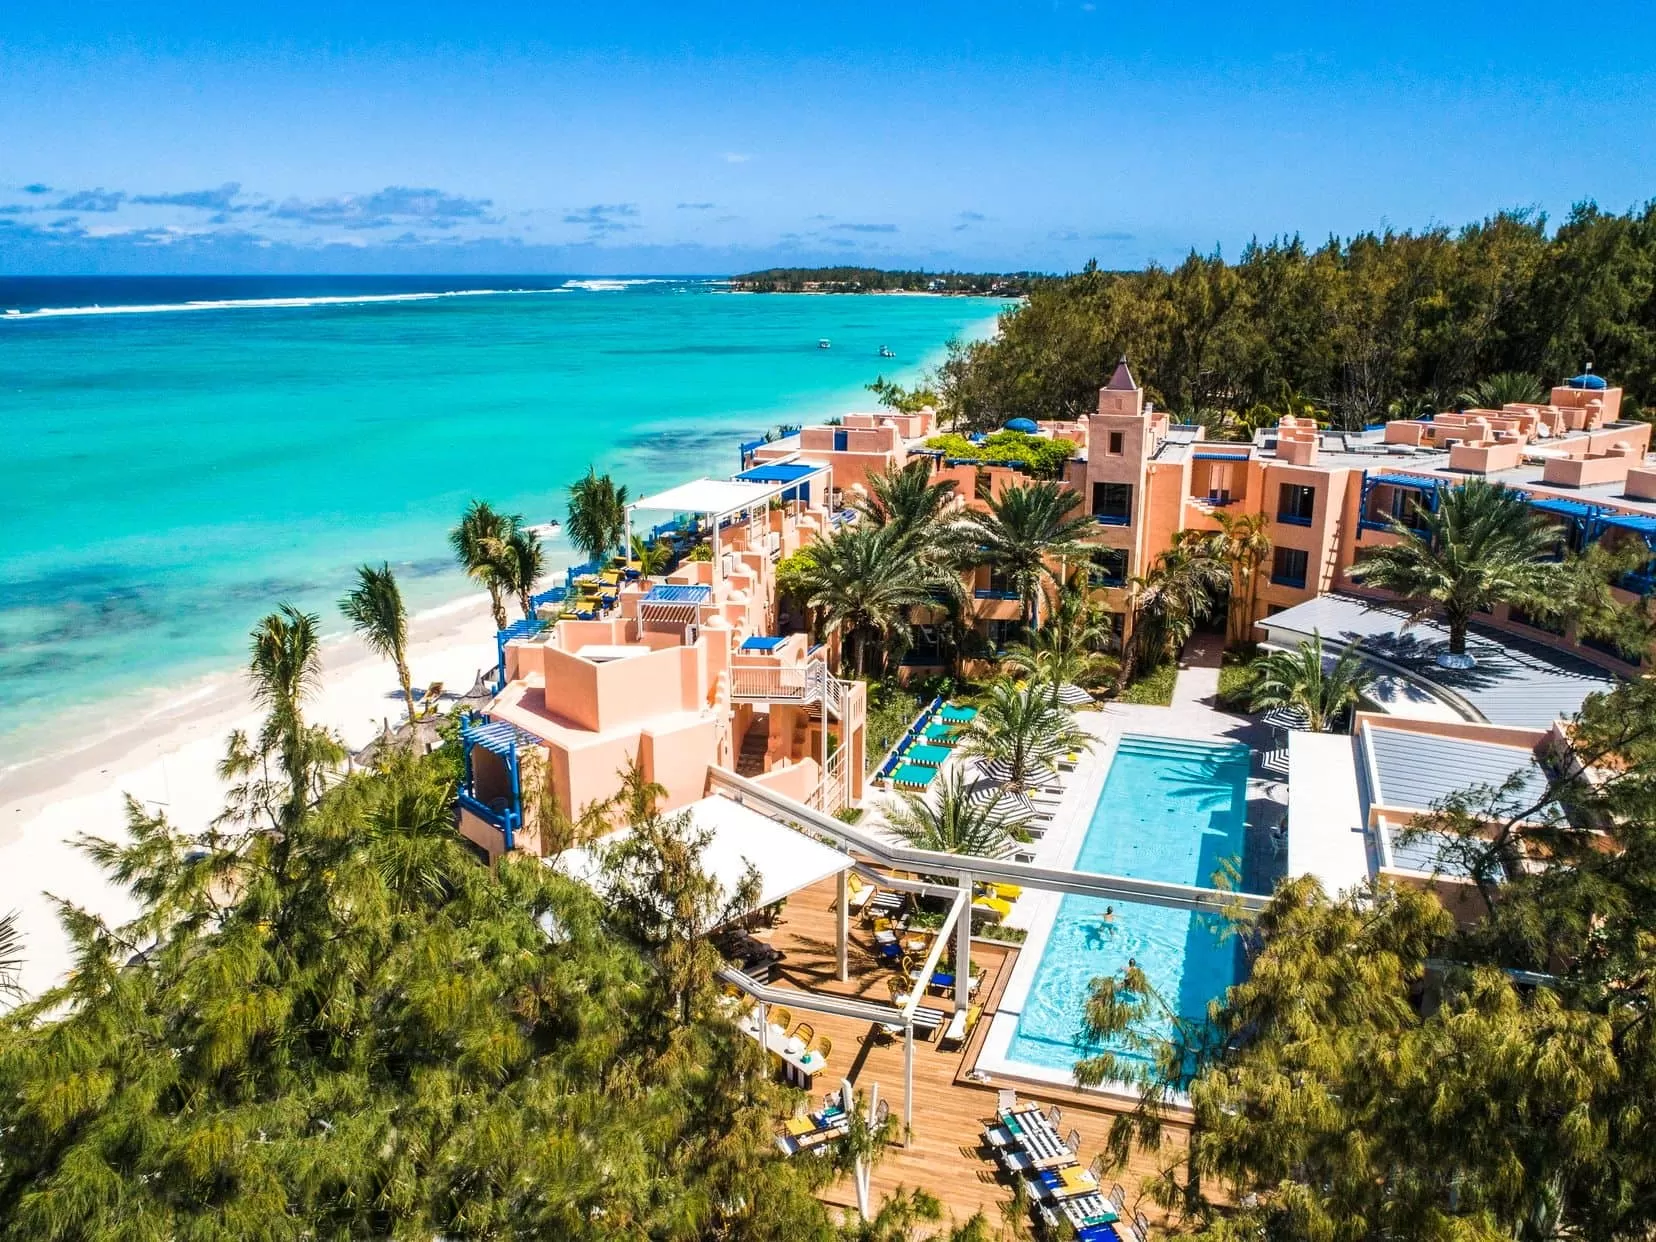 Salt of Palmar: Eco-Friendly Beachfront Hotel in Mauritius